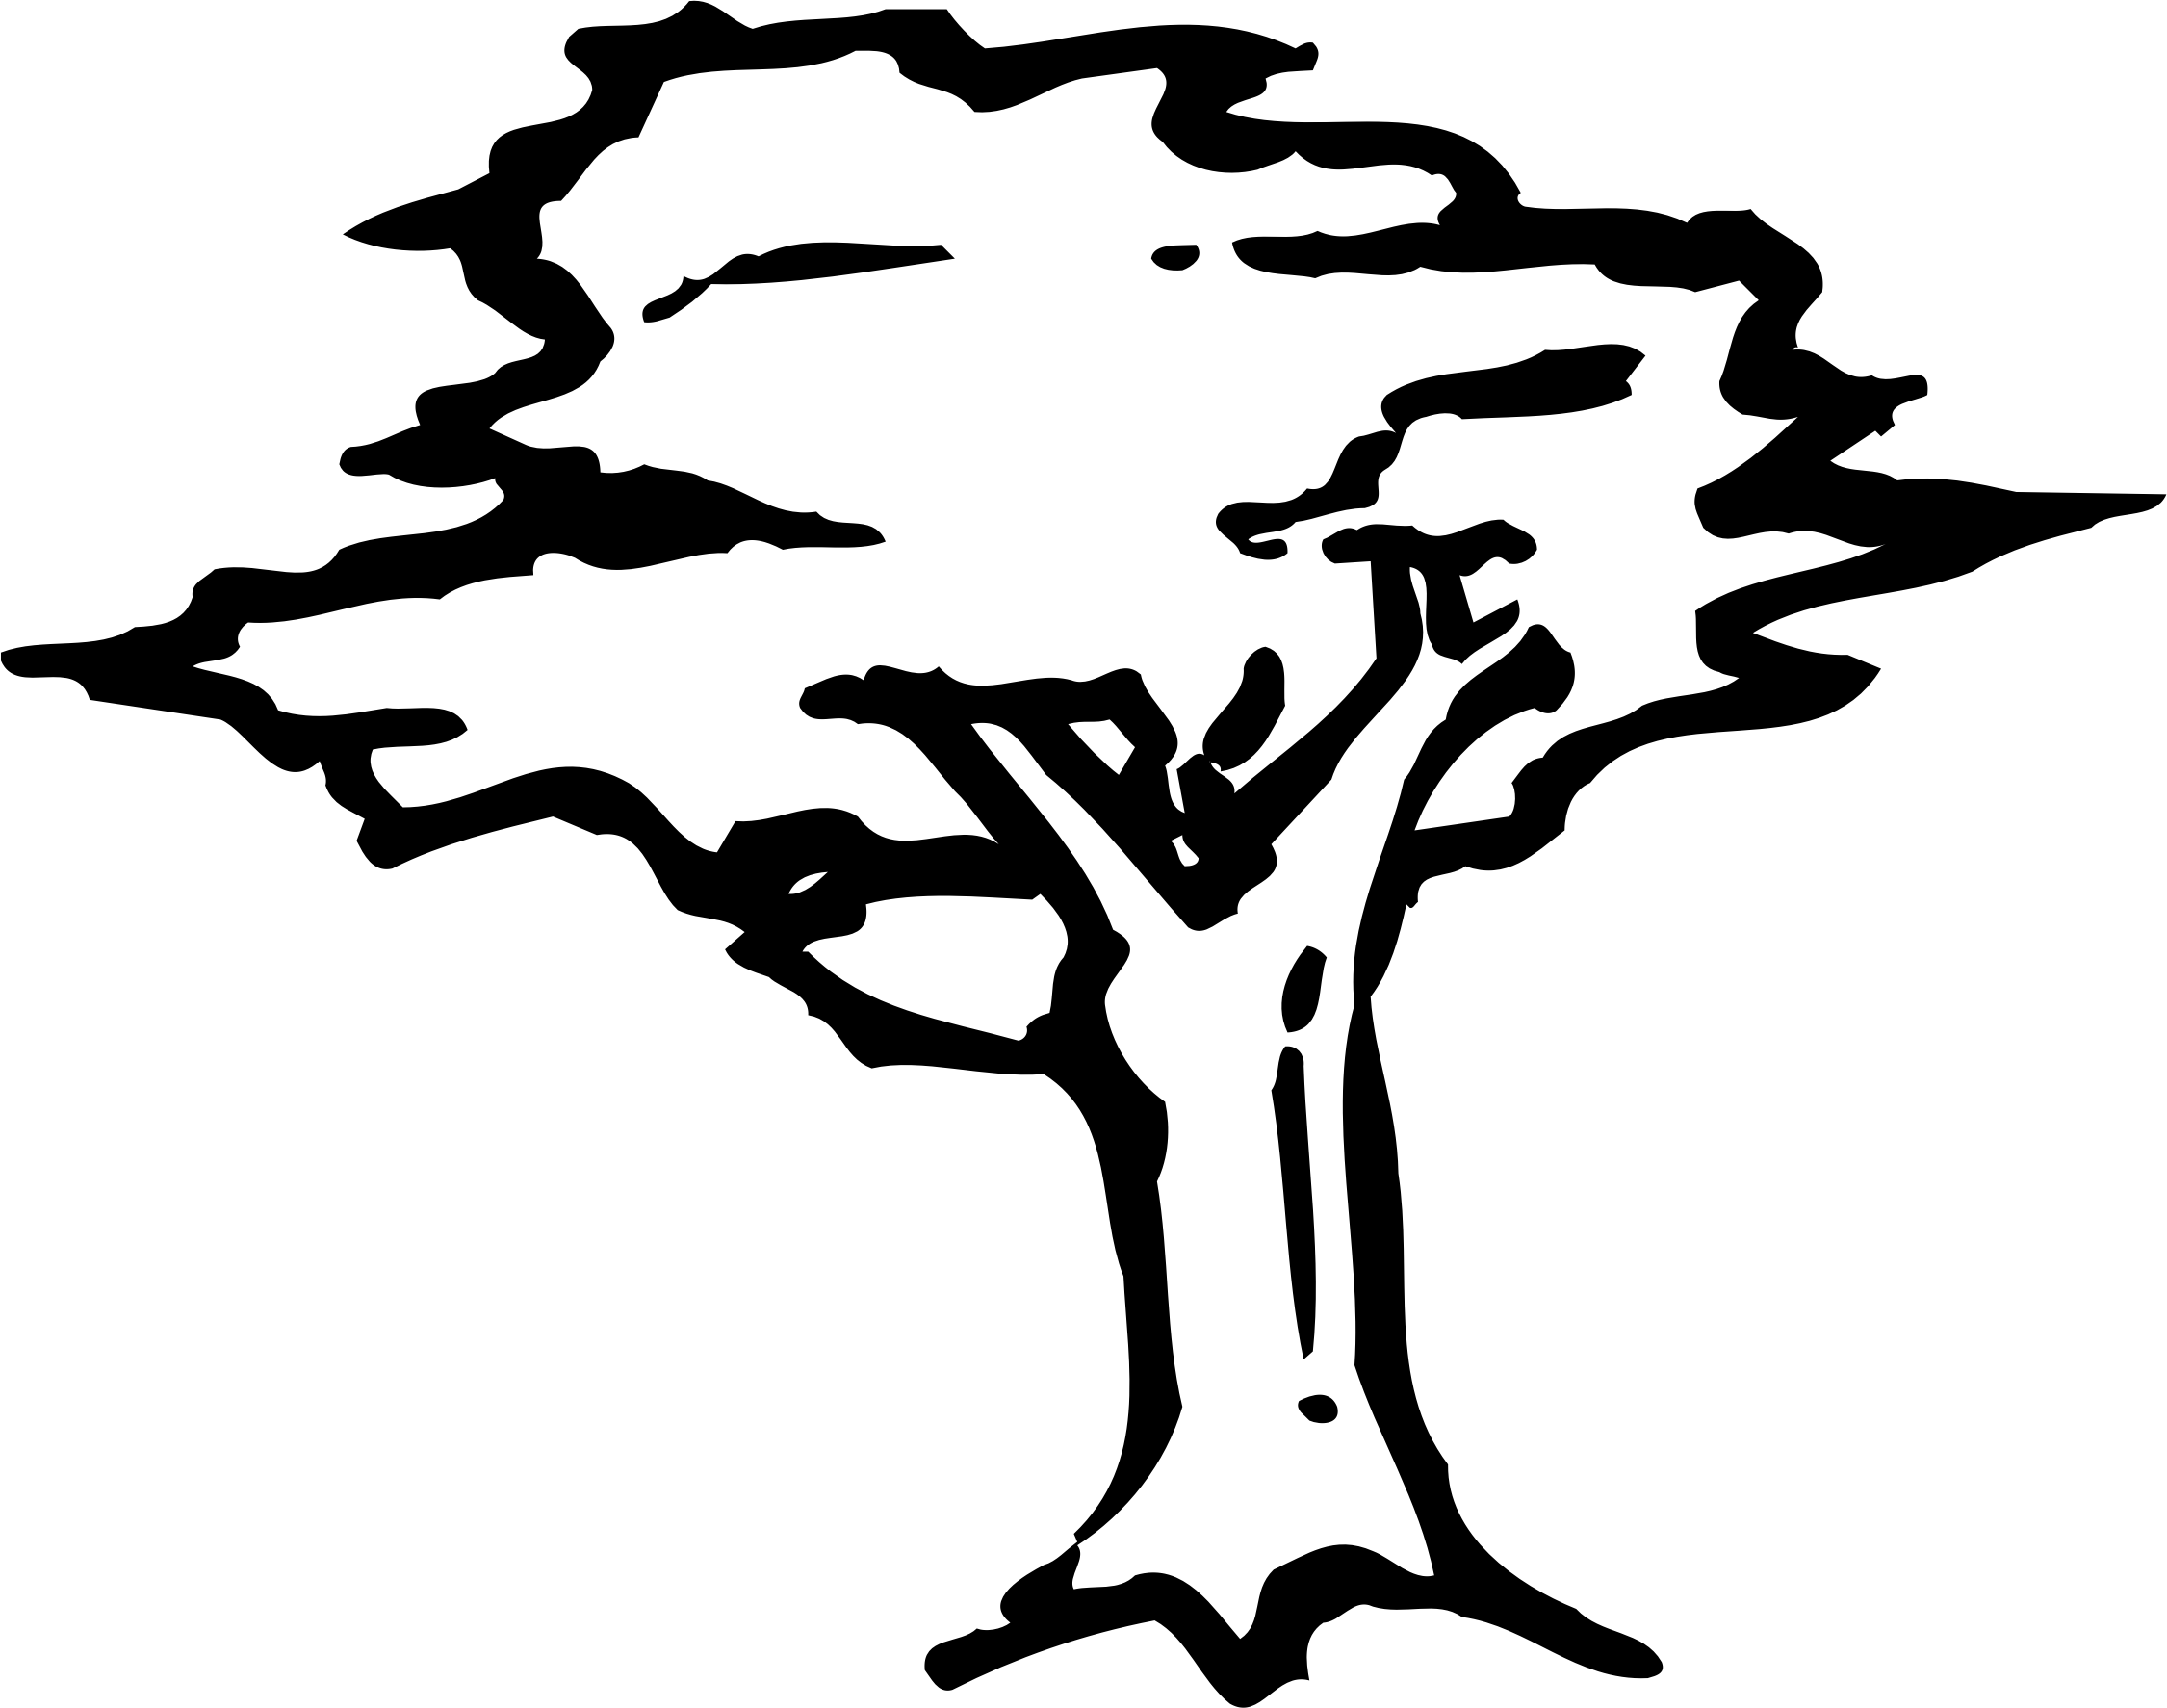 Raseone Tree 1 By @raseone, A Stylized Black And White - รูป วาด ต้นไม้ Png (2251x1774)